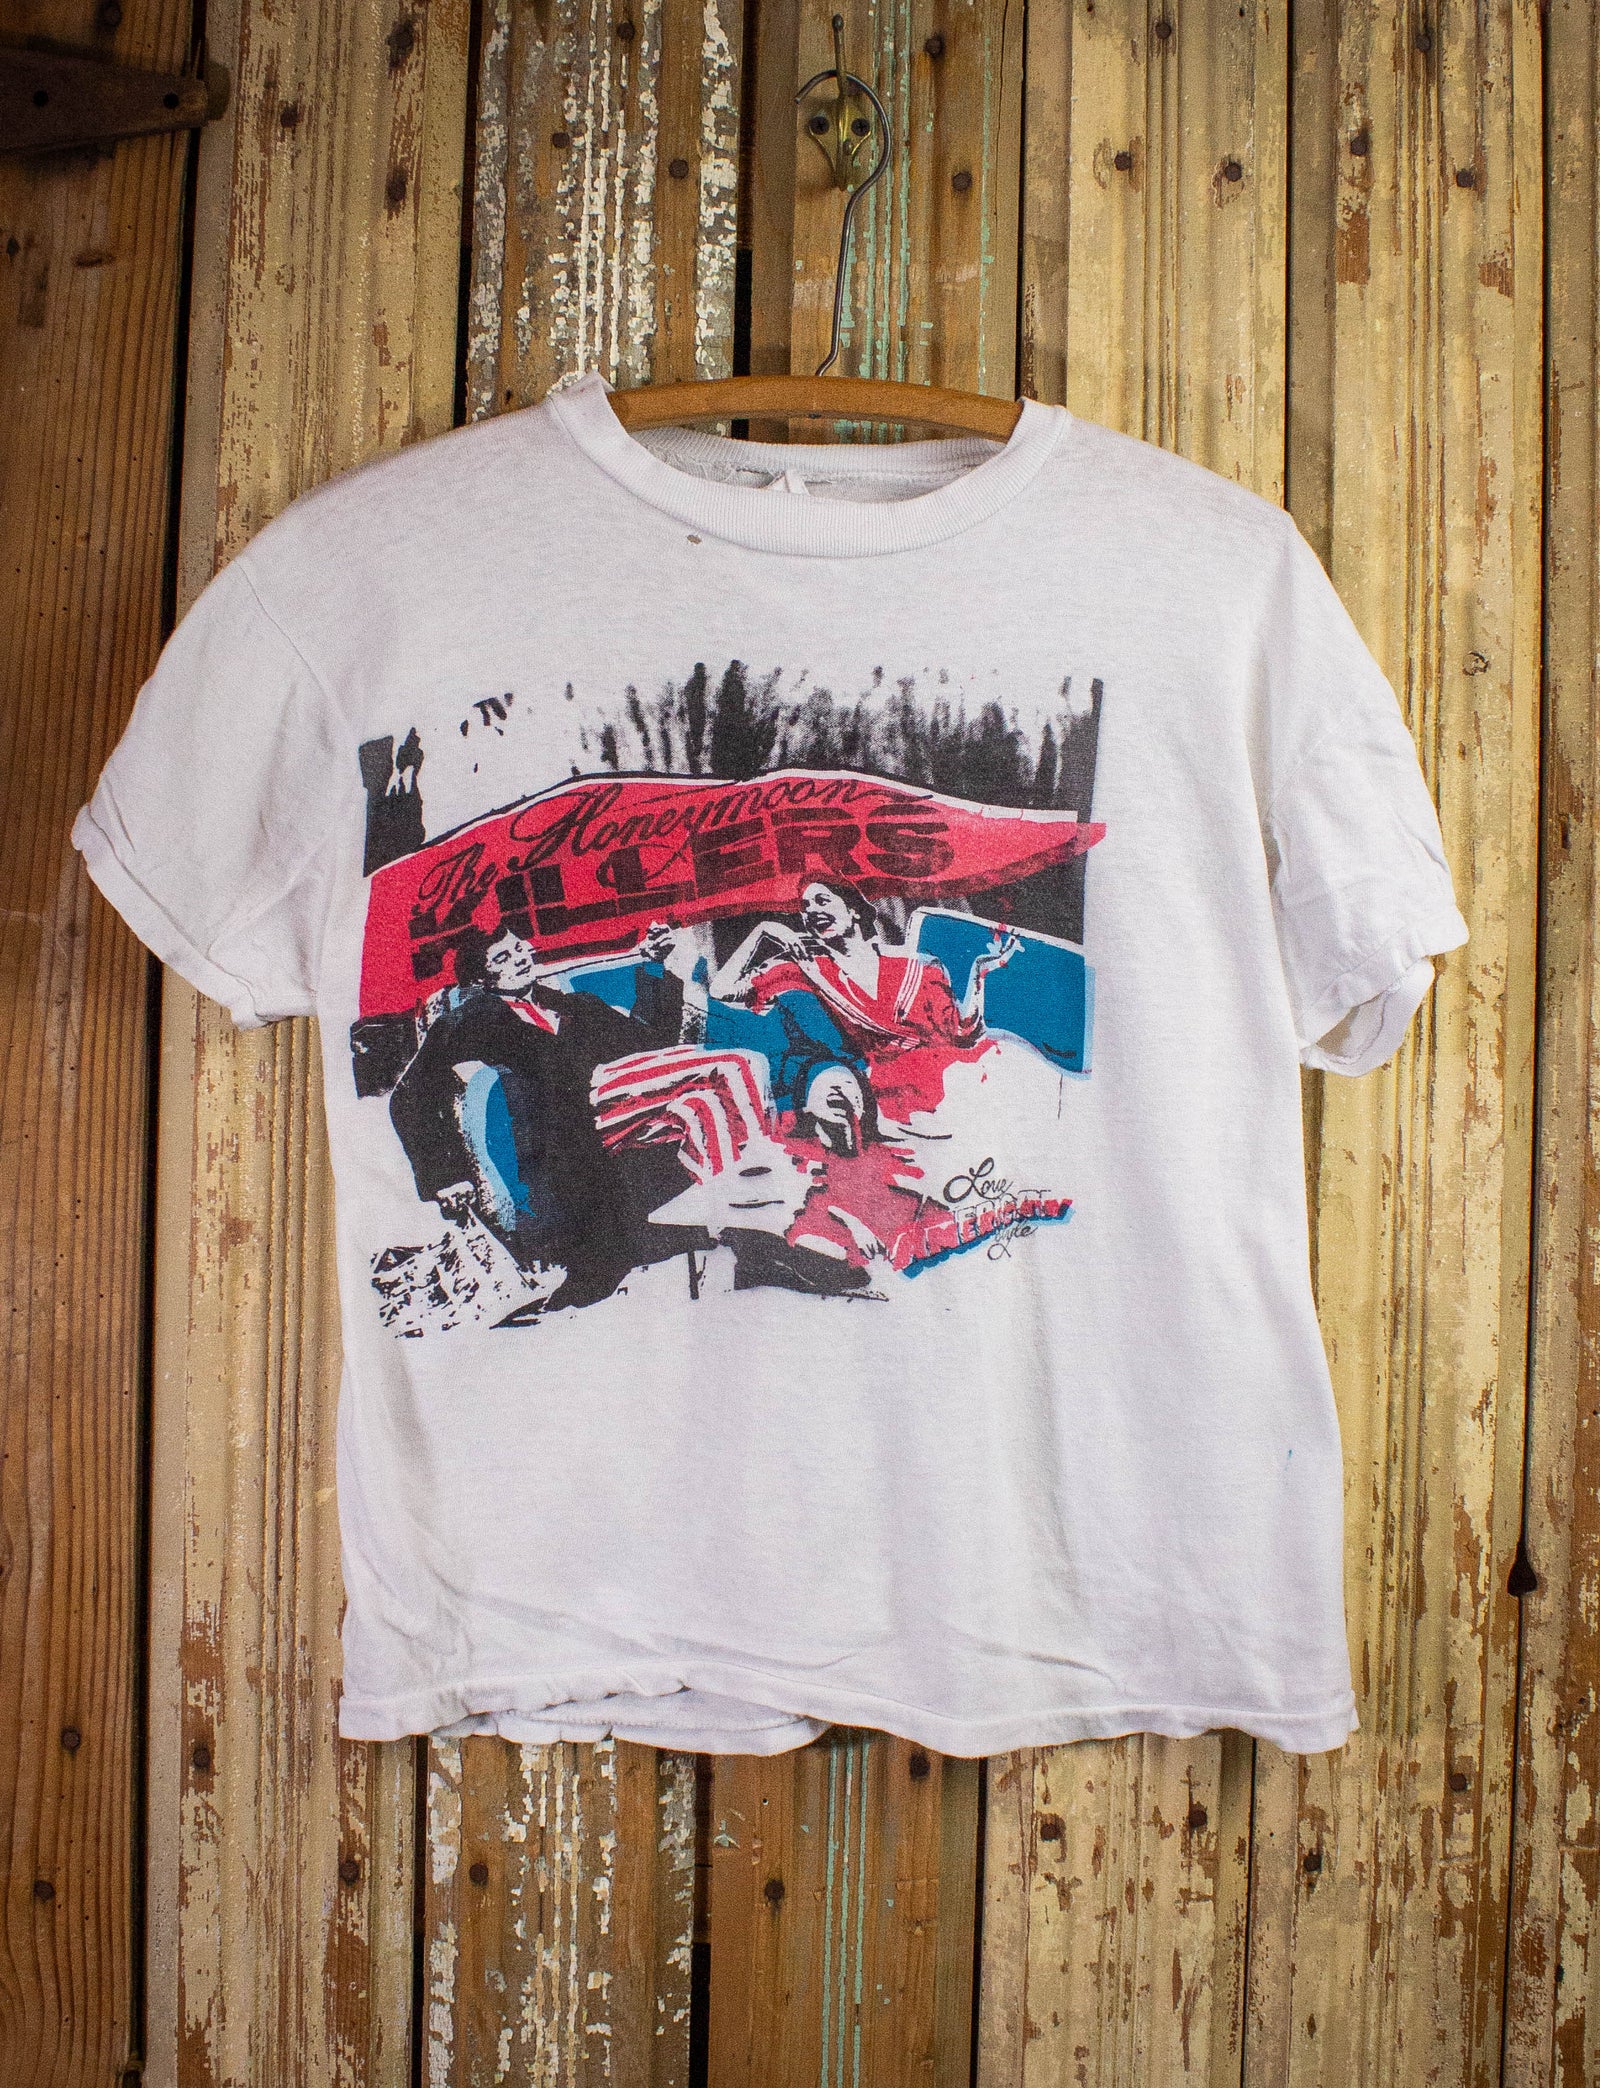 Vintage The Honeymoon Killers Love American Style Concert T Shirt 1985 White Medium